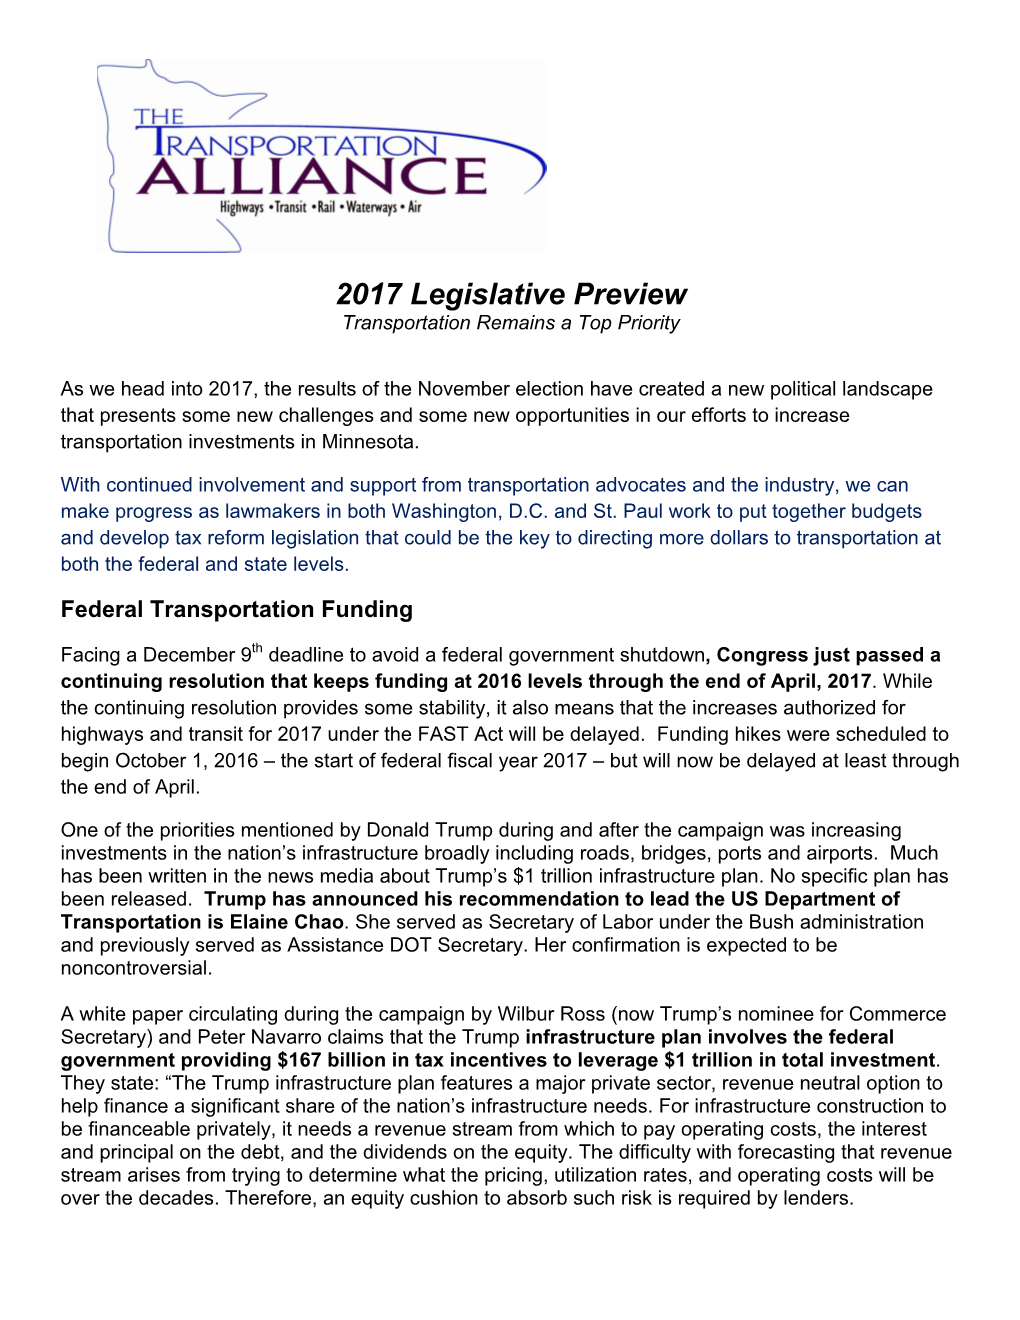 2017 Legislative Preview Transportation Remains a Top Priority